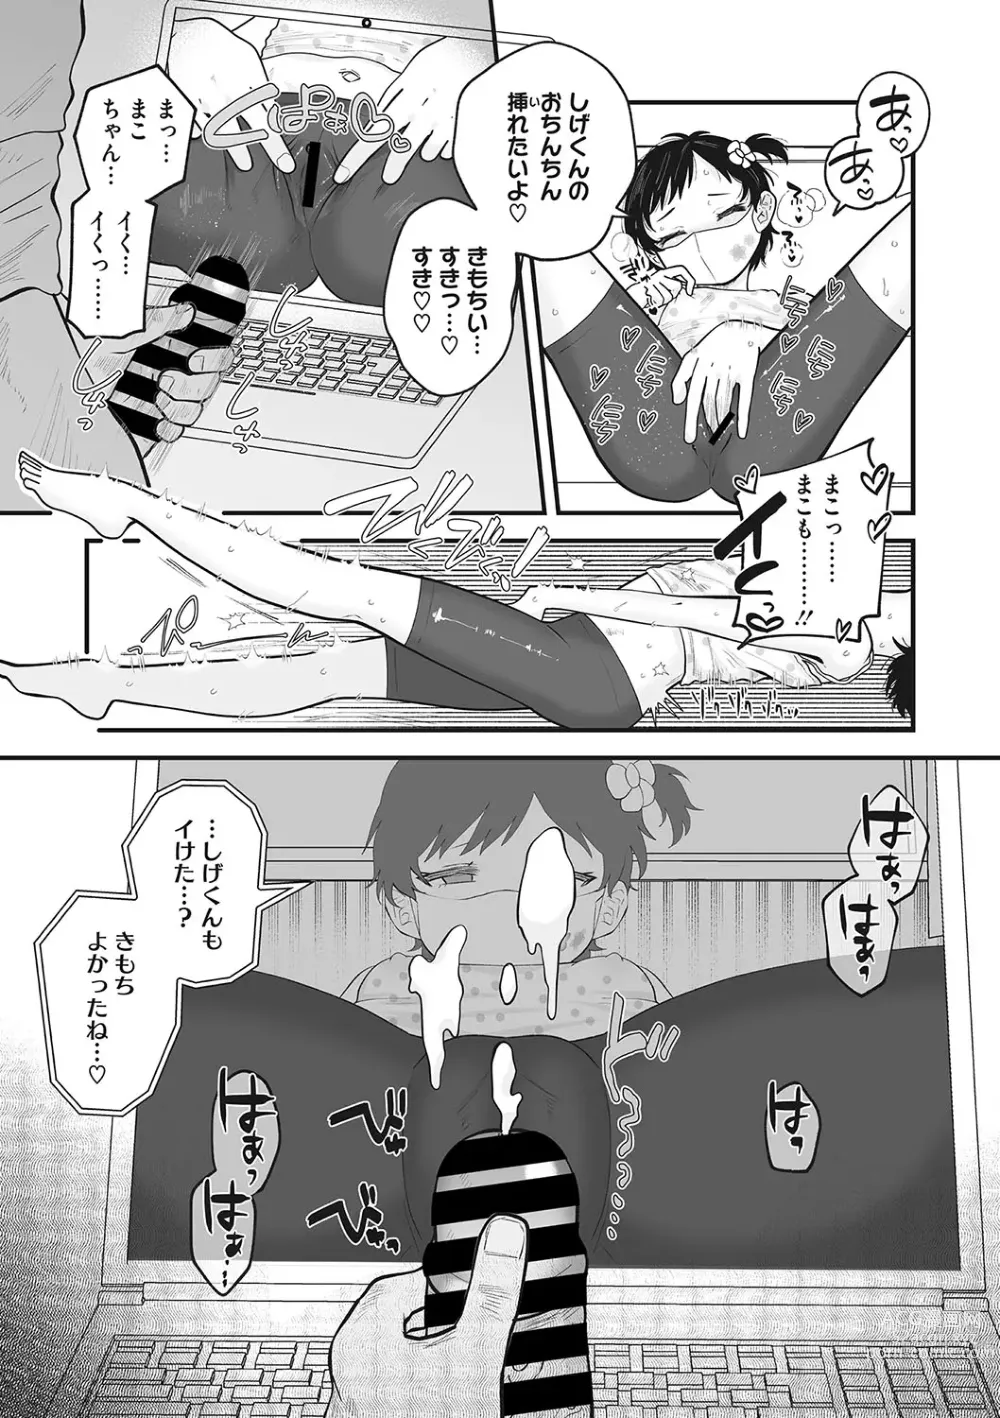 Page 7 of manga Little Girl Strike Vol. 30